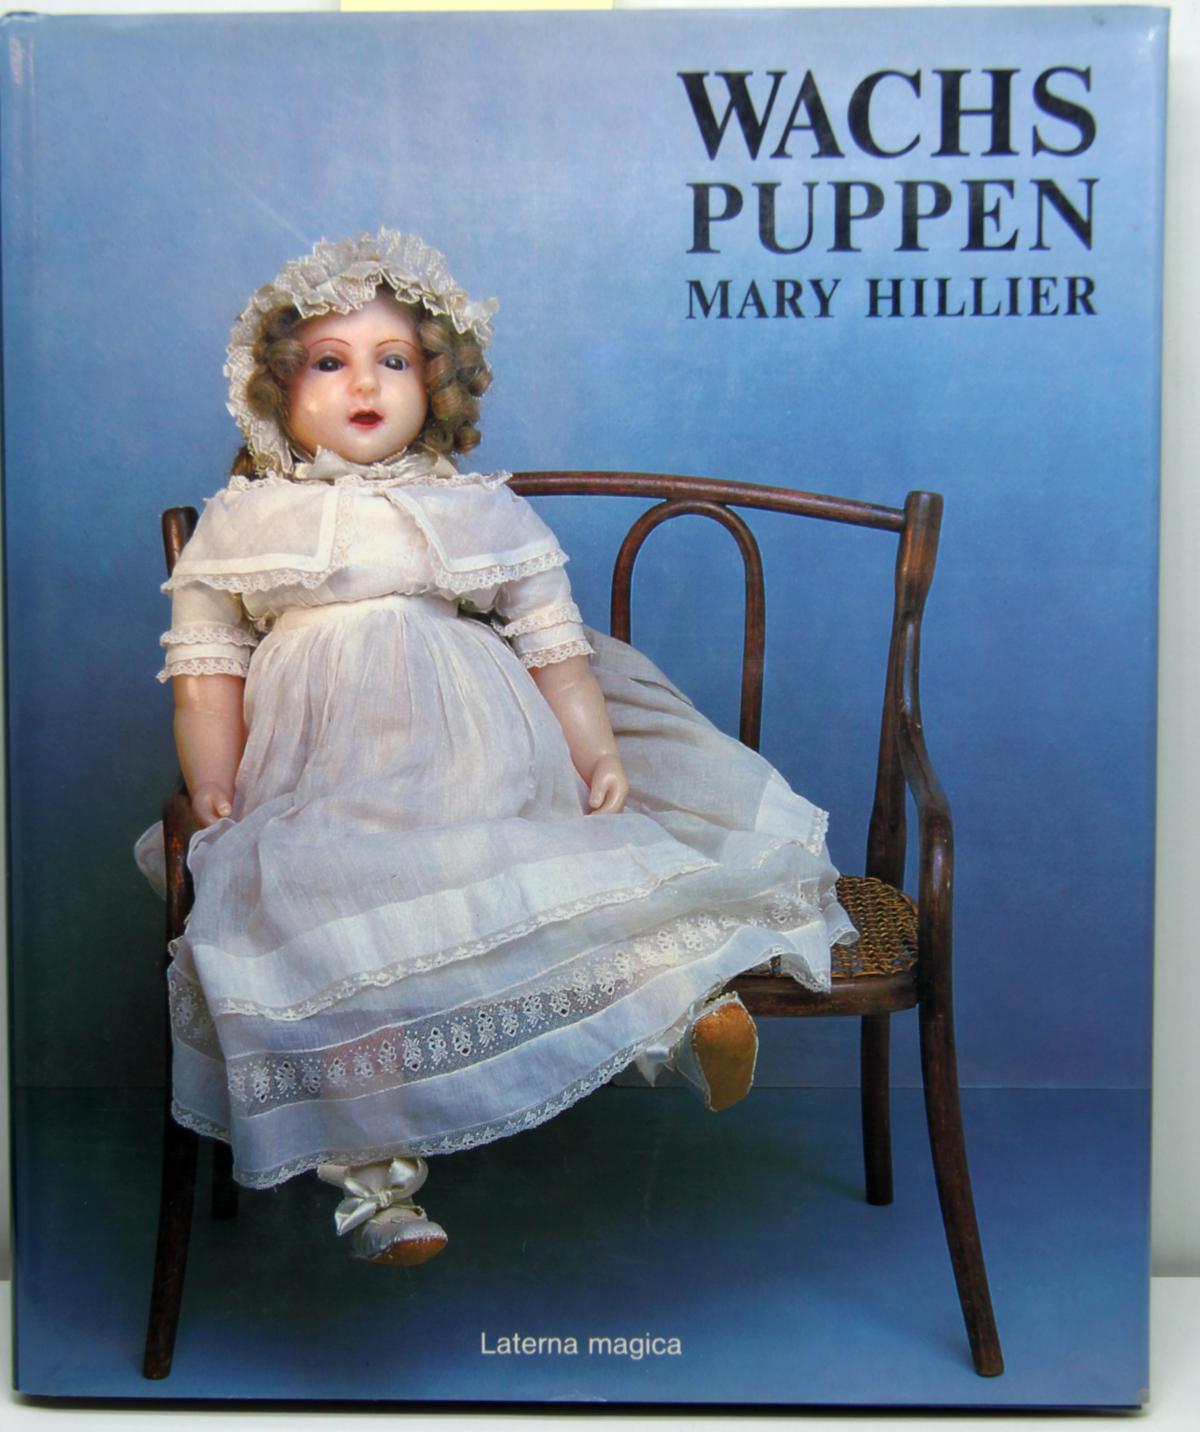 Buch "Wachspuppen" Mary Hillier